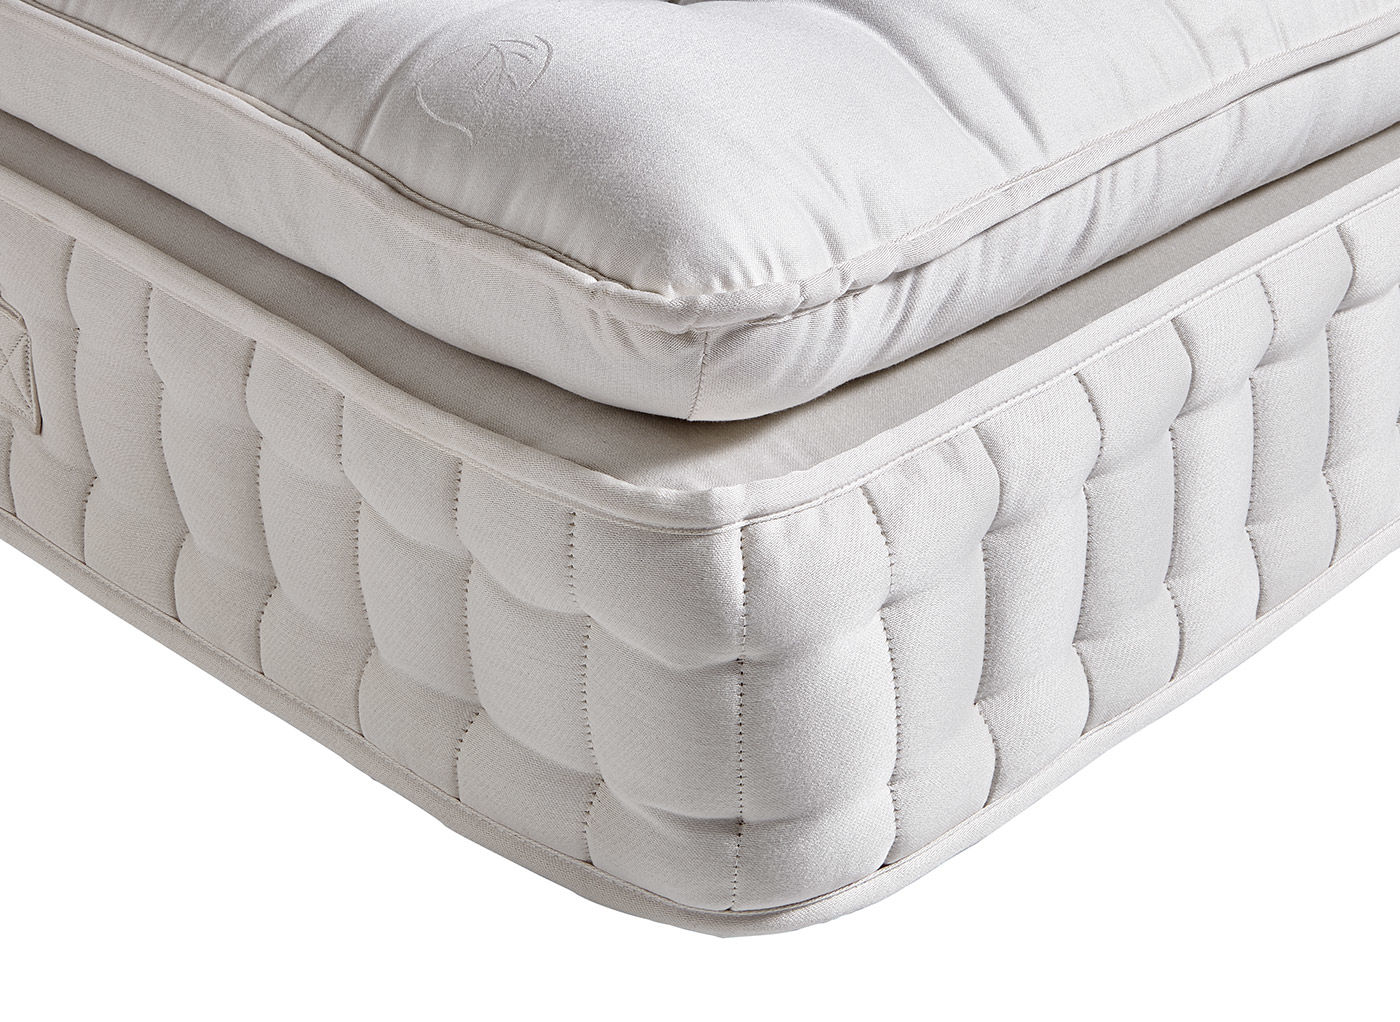 flaxby mattress 8500 reviews